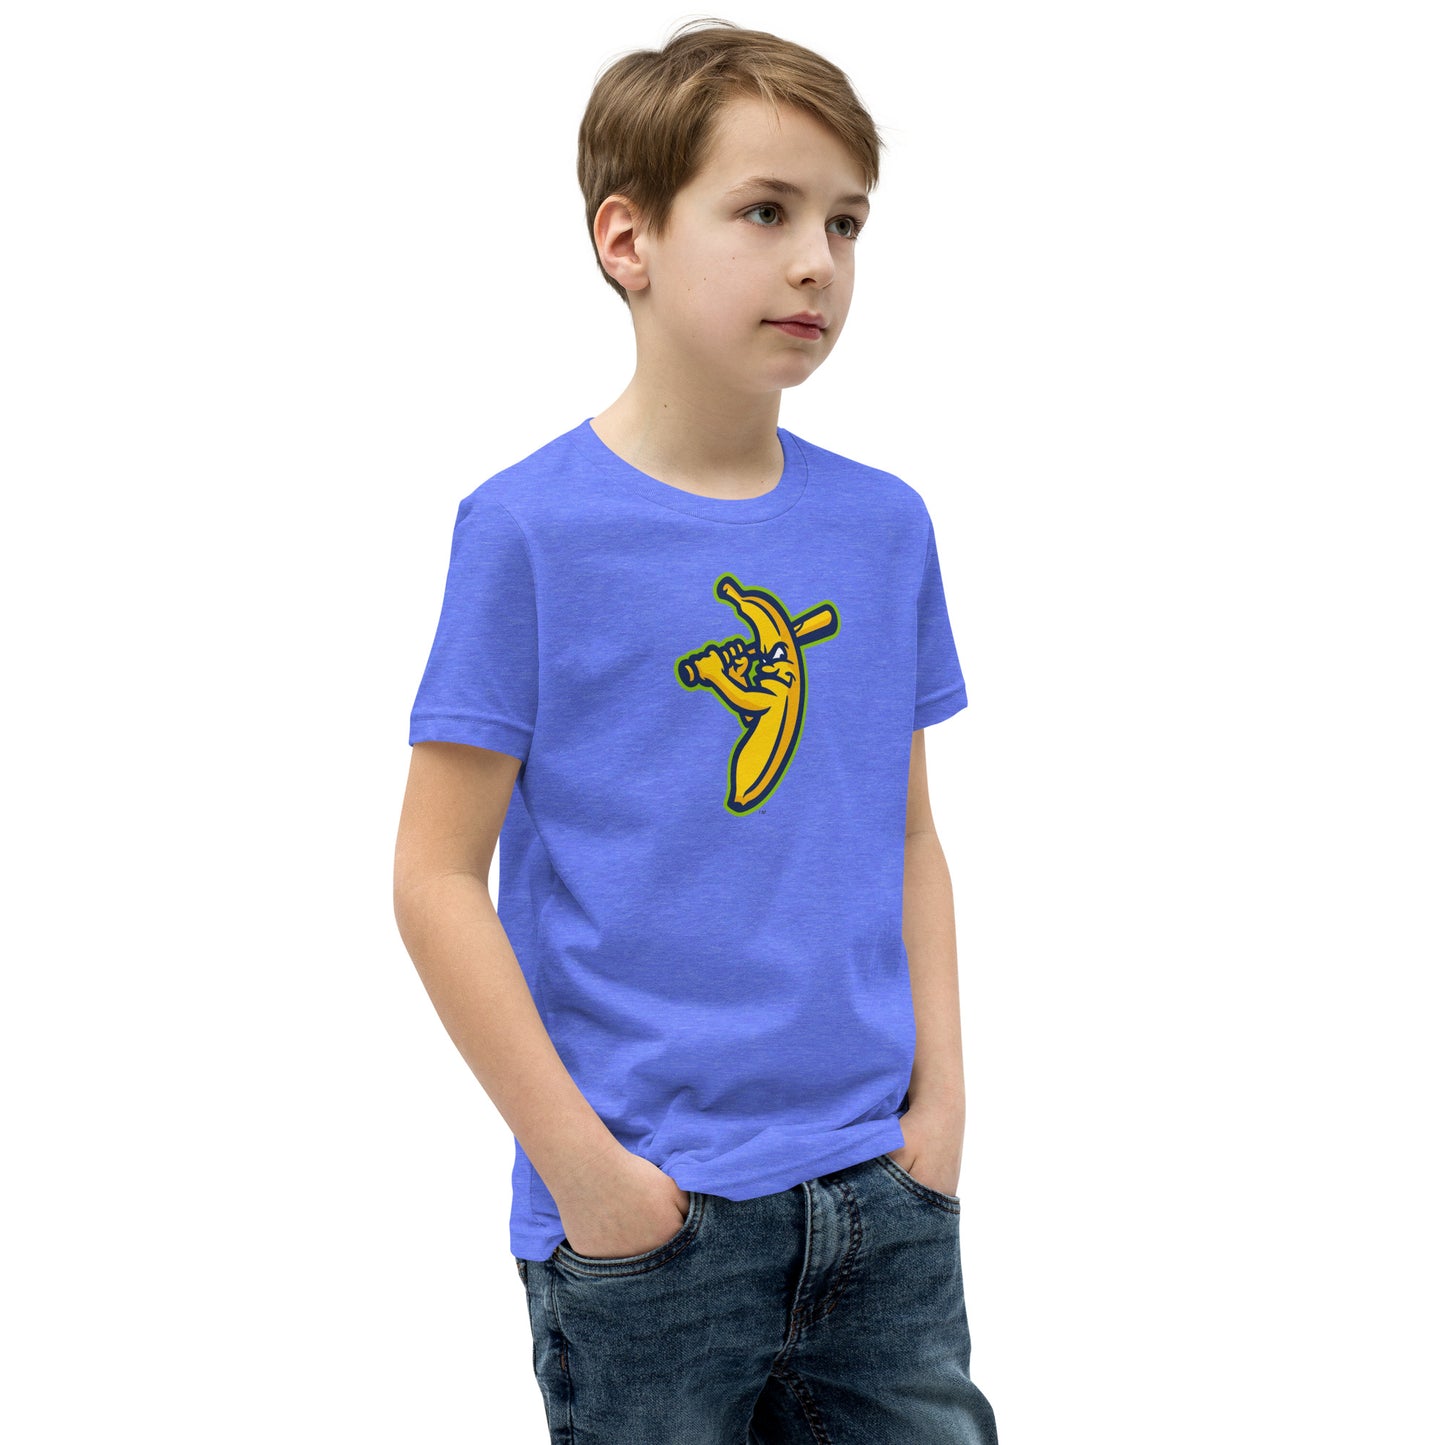 Banana Simple Youth Short Sleeve T-Shirt